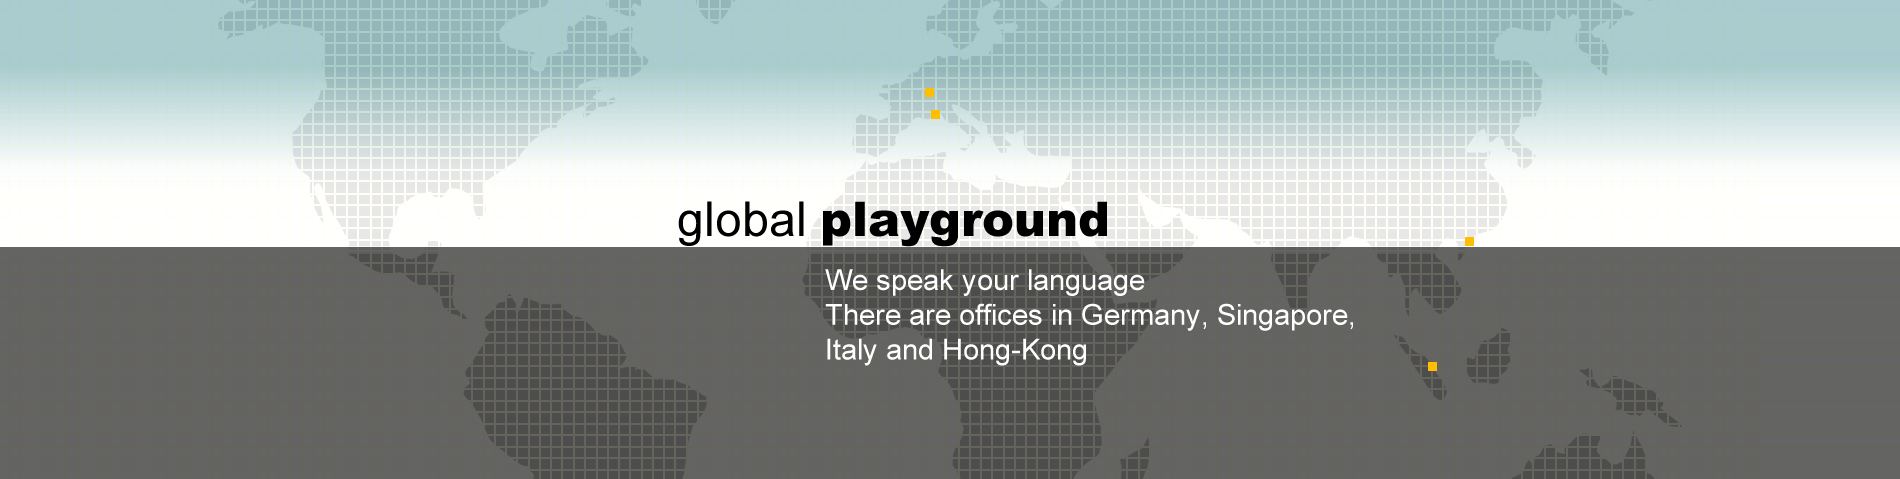 global playground